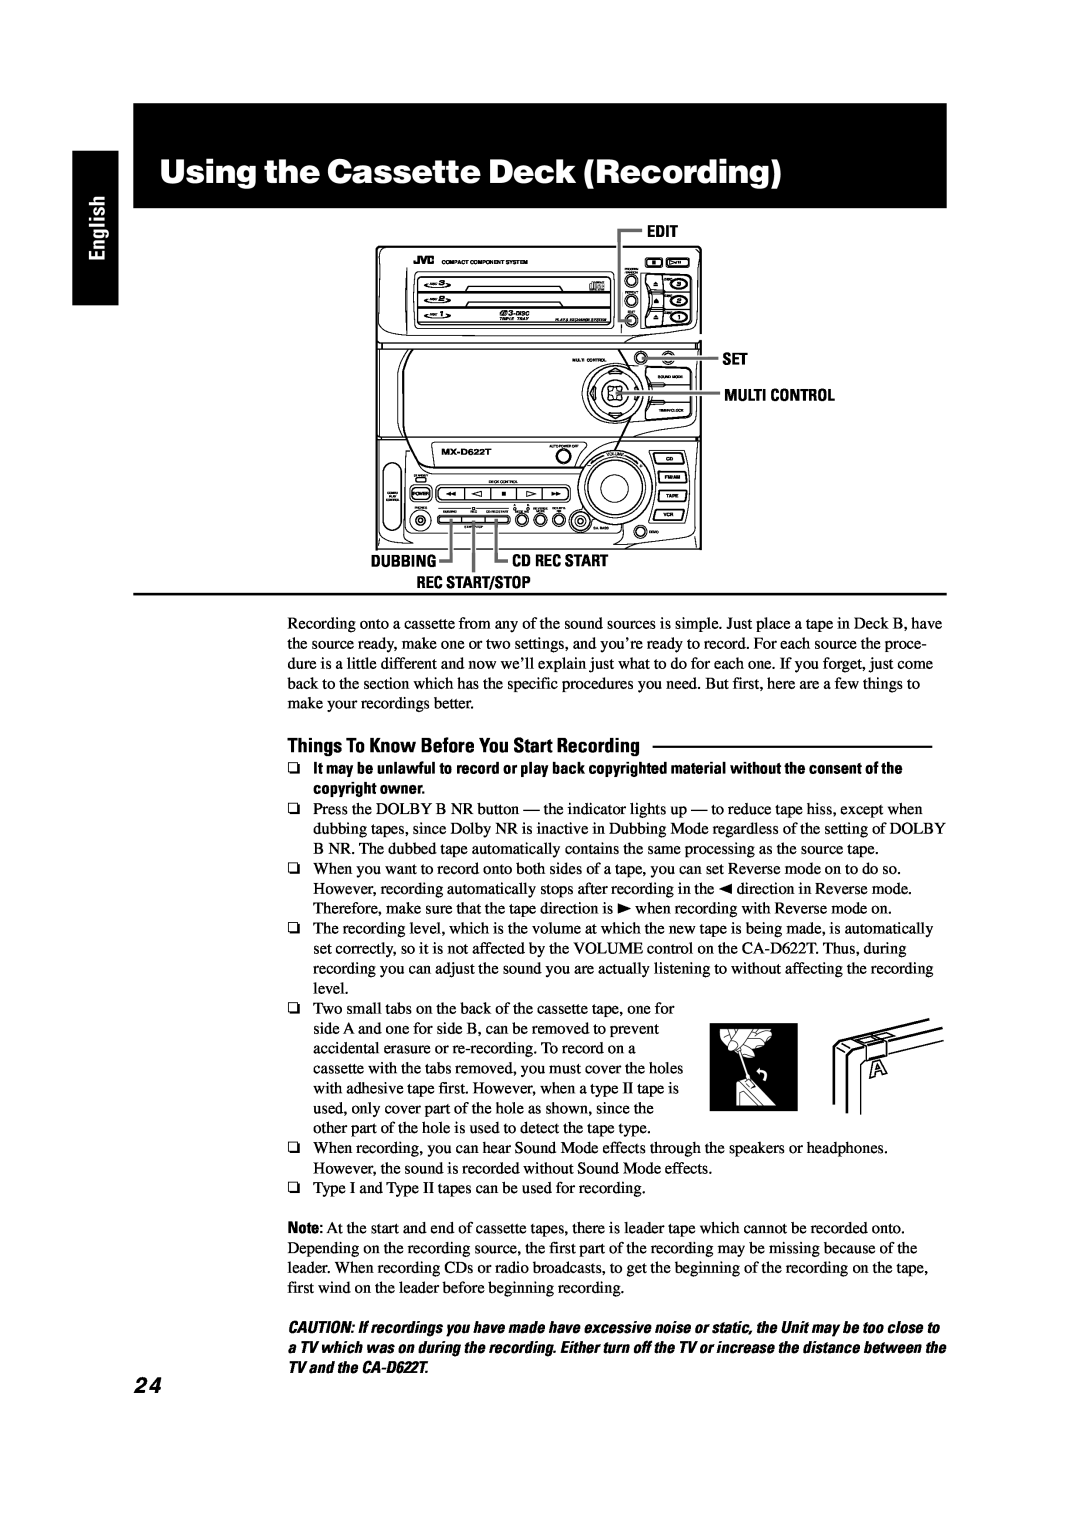 JVC GVT0001-002A manual Using the Cassette Deck Recording, English, Multi Control, Dubbing, Cd Rec Start, Rec Start/Stop 